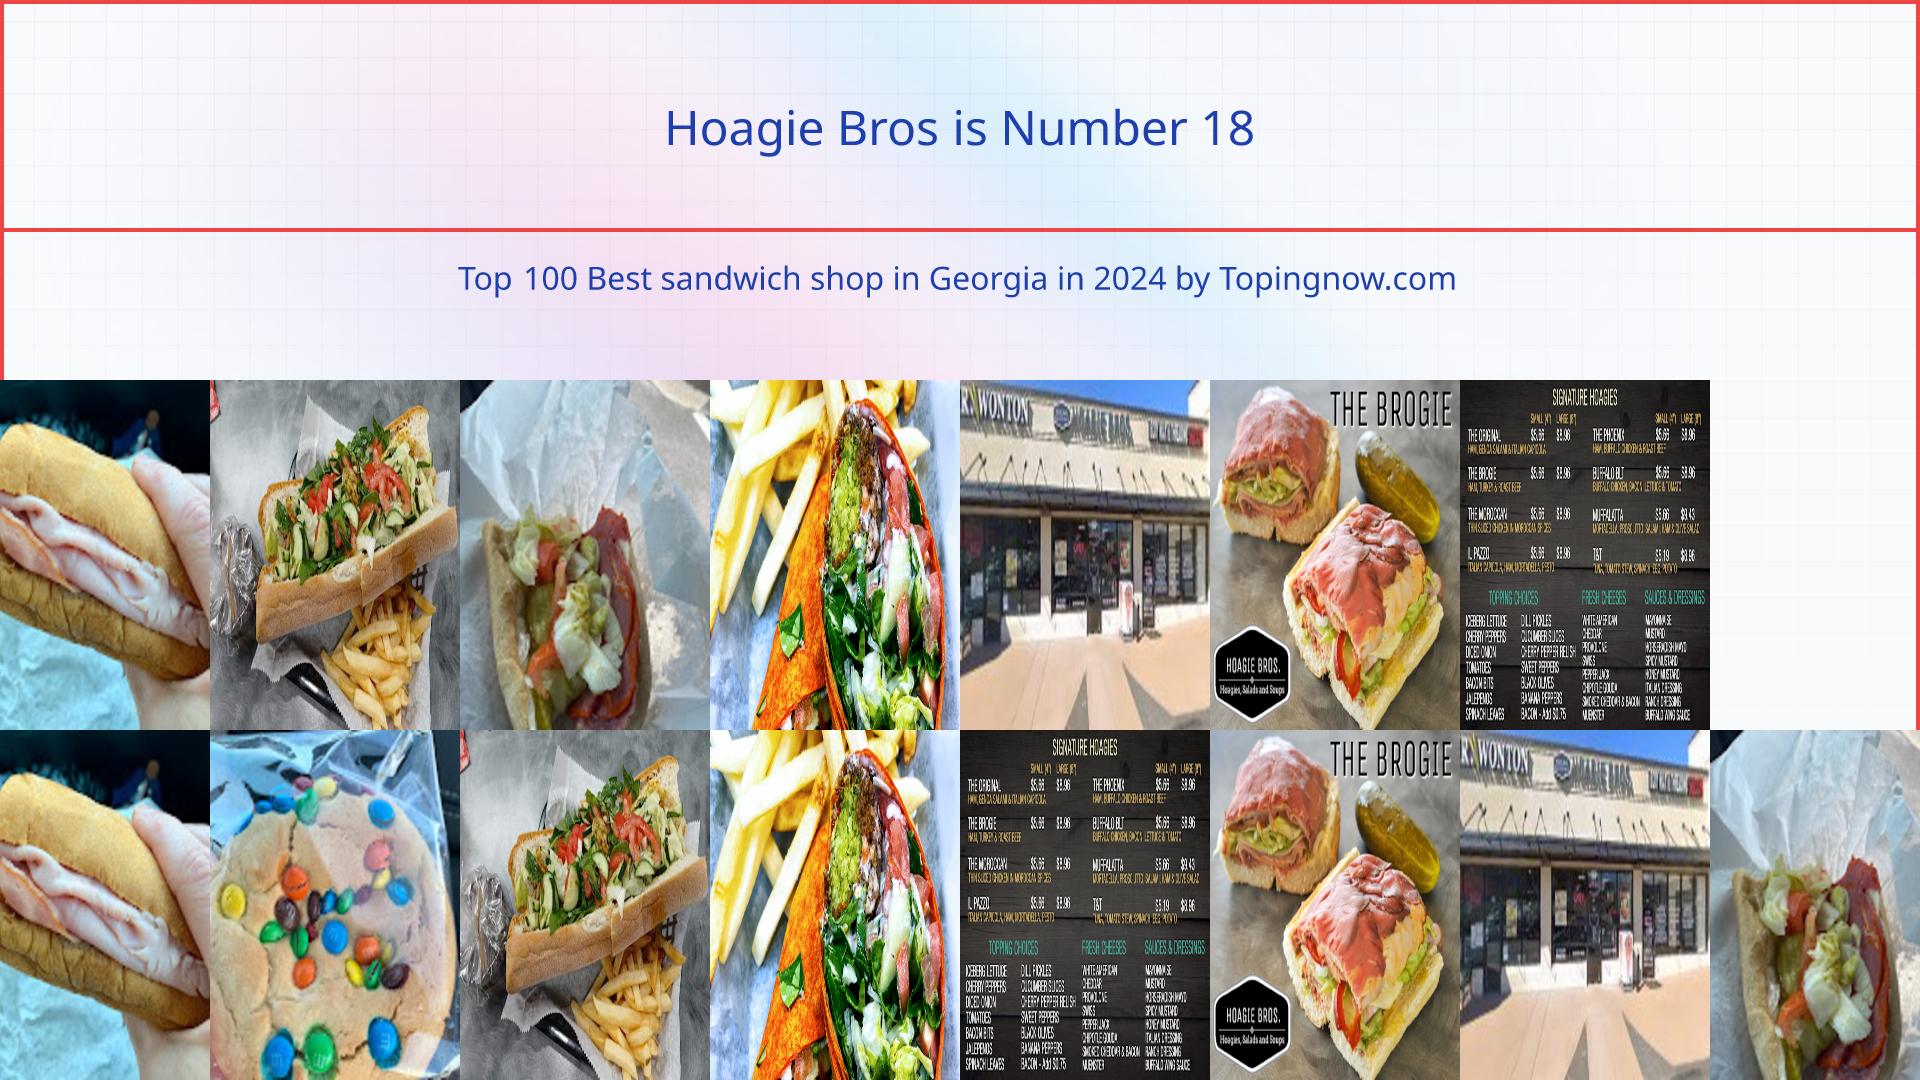 Hoagie Bros: Top 100 Best sandwich shop in Georgia in 2024